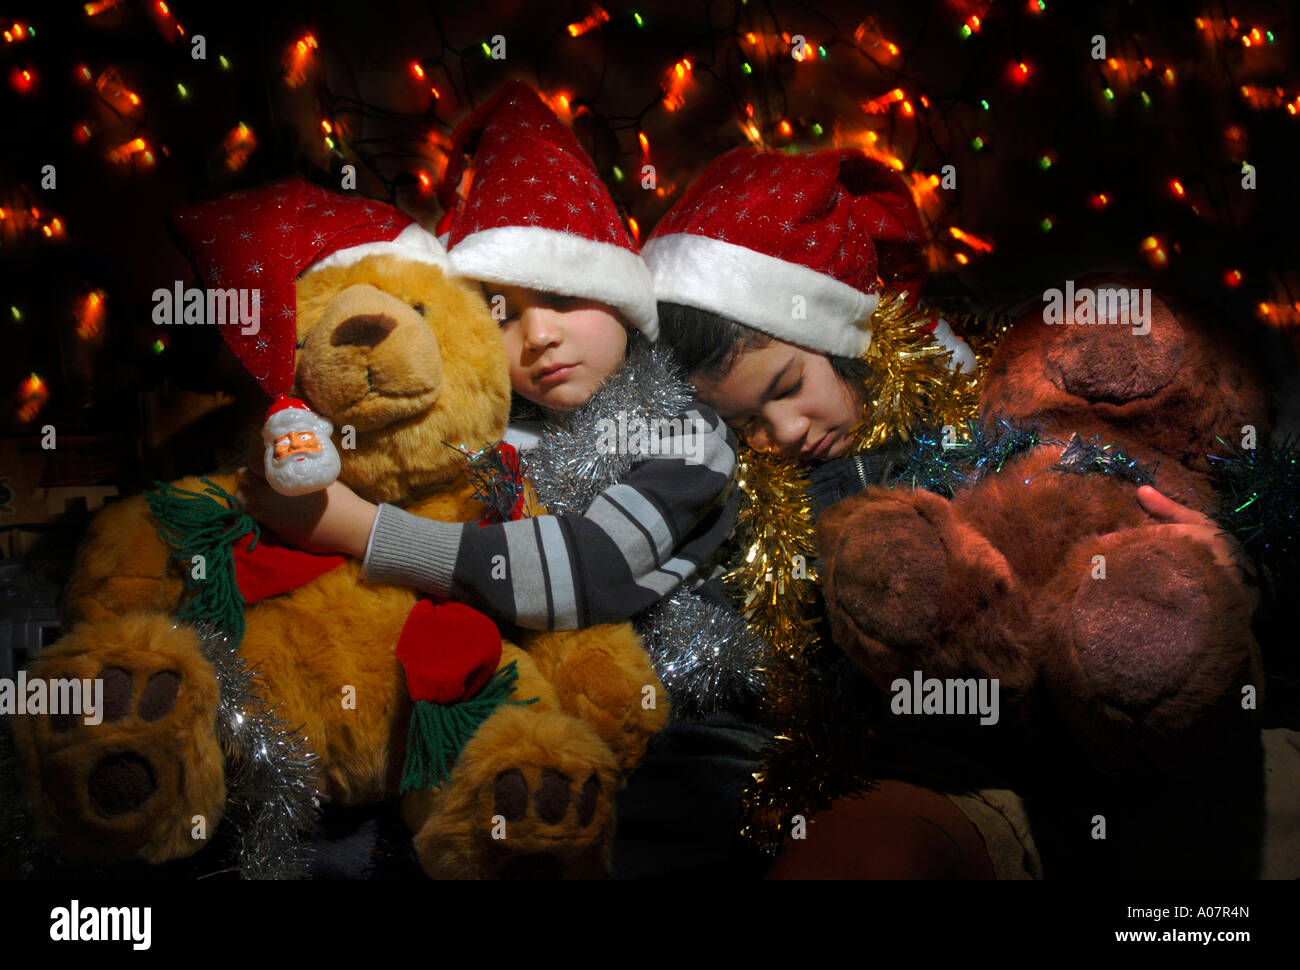 Children sleeping with Christmas teddy bears Stock Photo